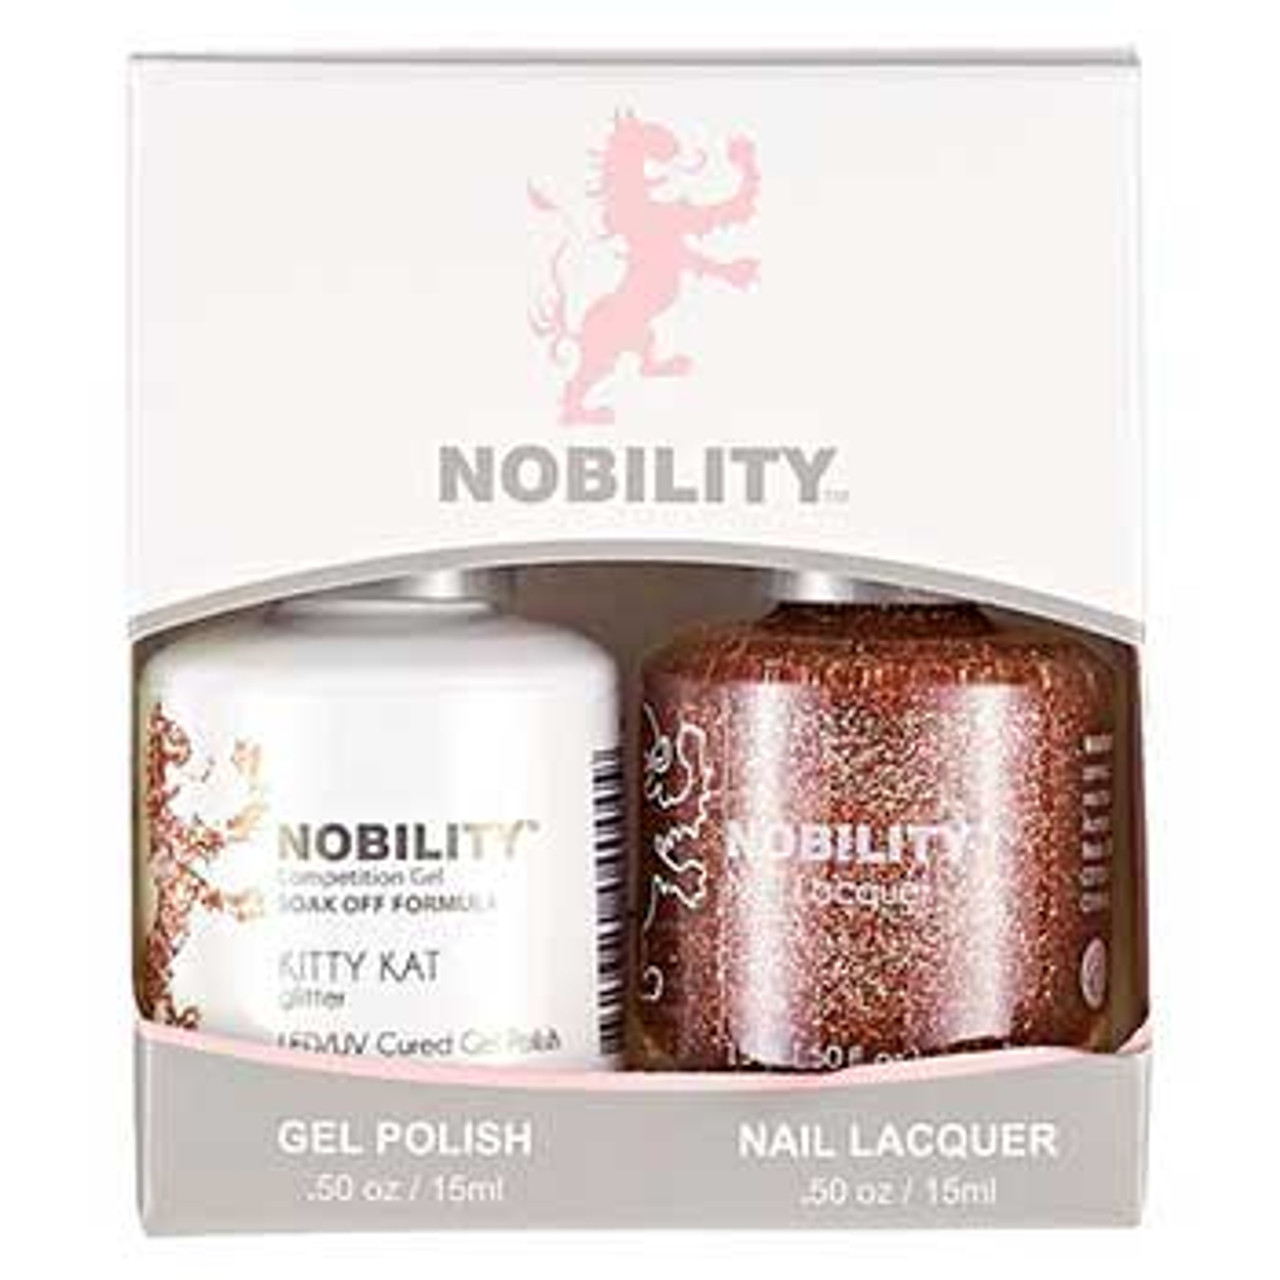 LeChat Nobility Gel Polish & Nail Lacquer Duo Set Tiger Lily - .5 oz / 15 ml